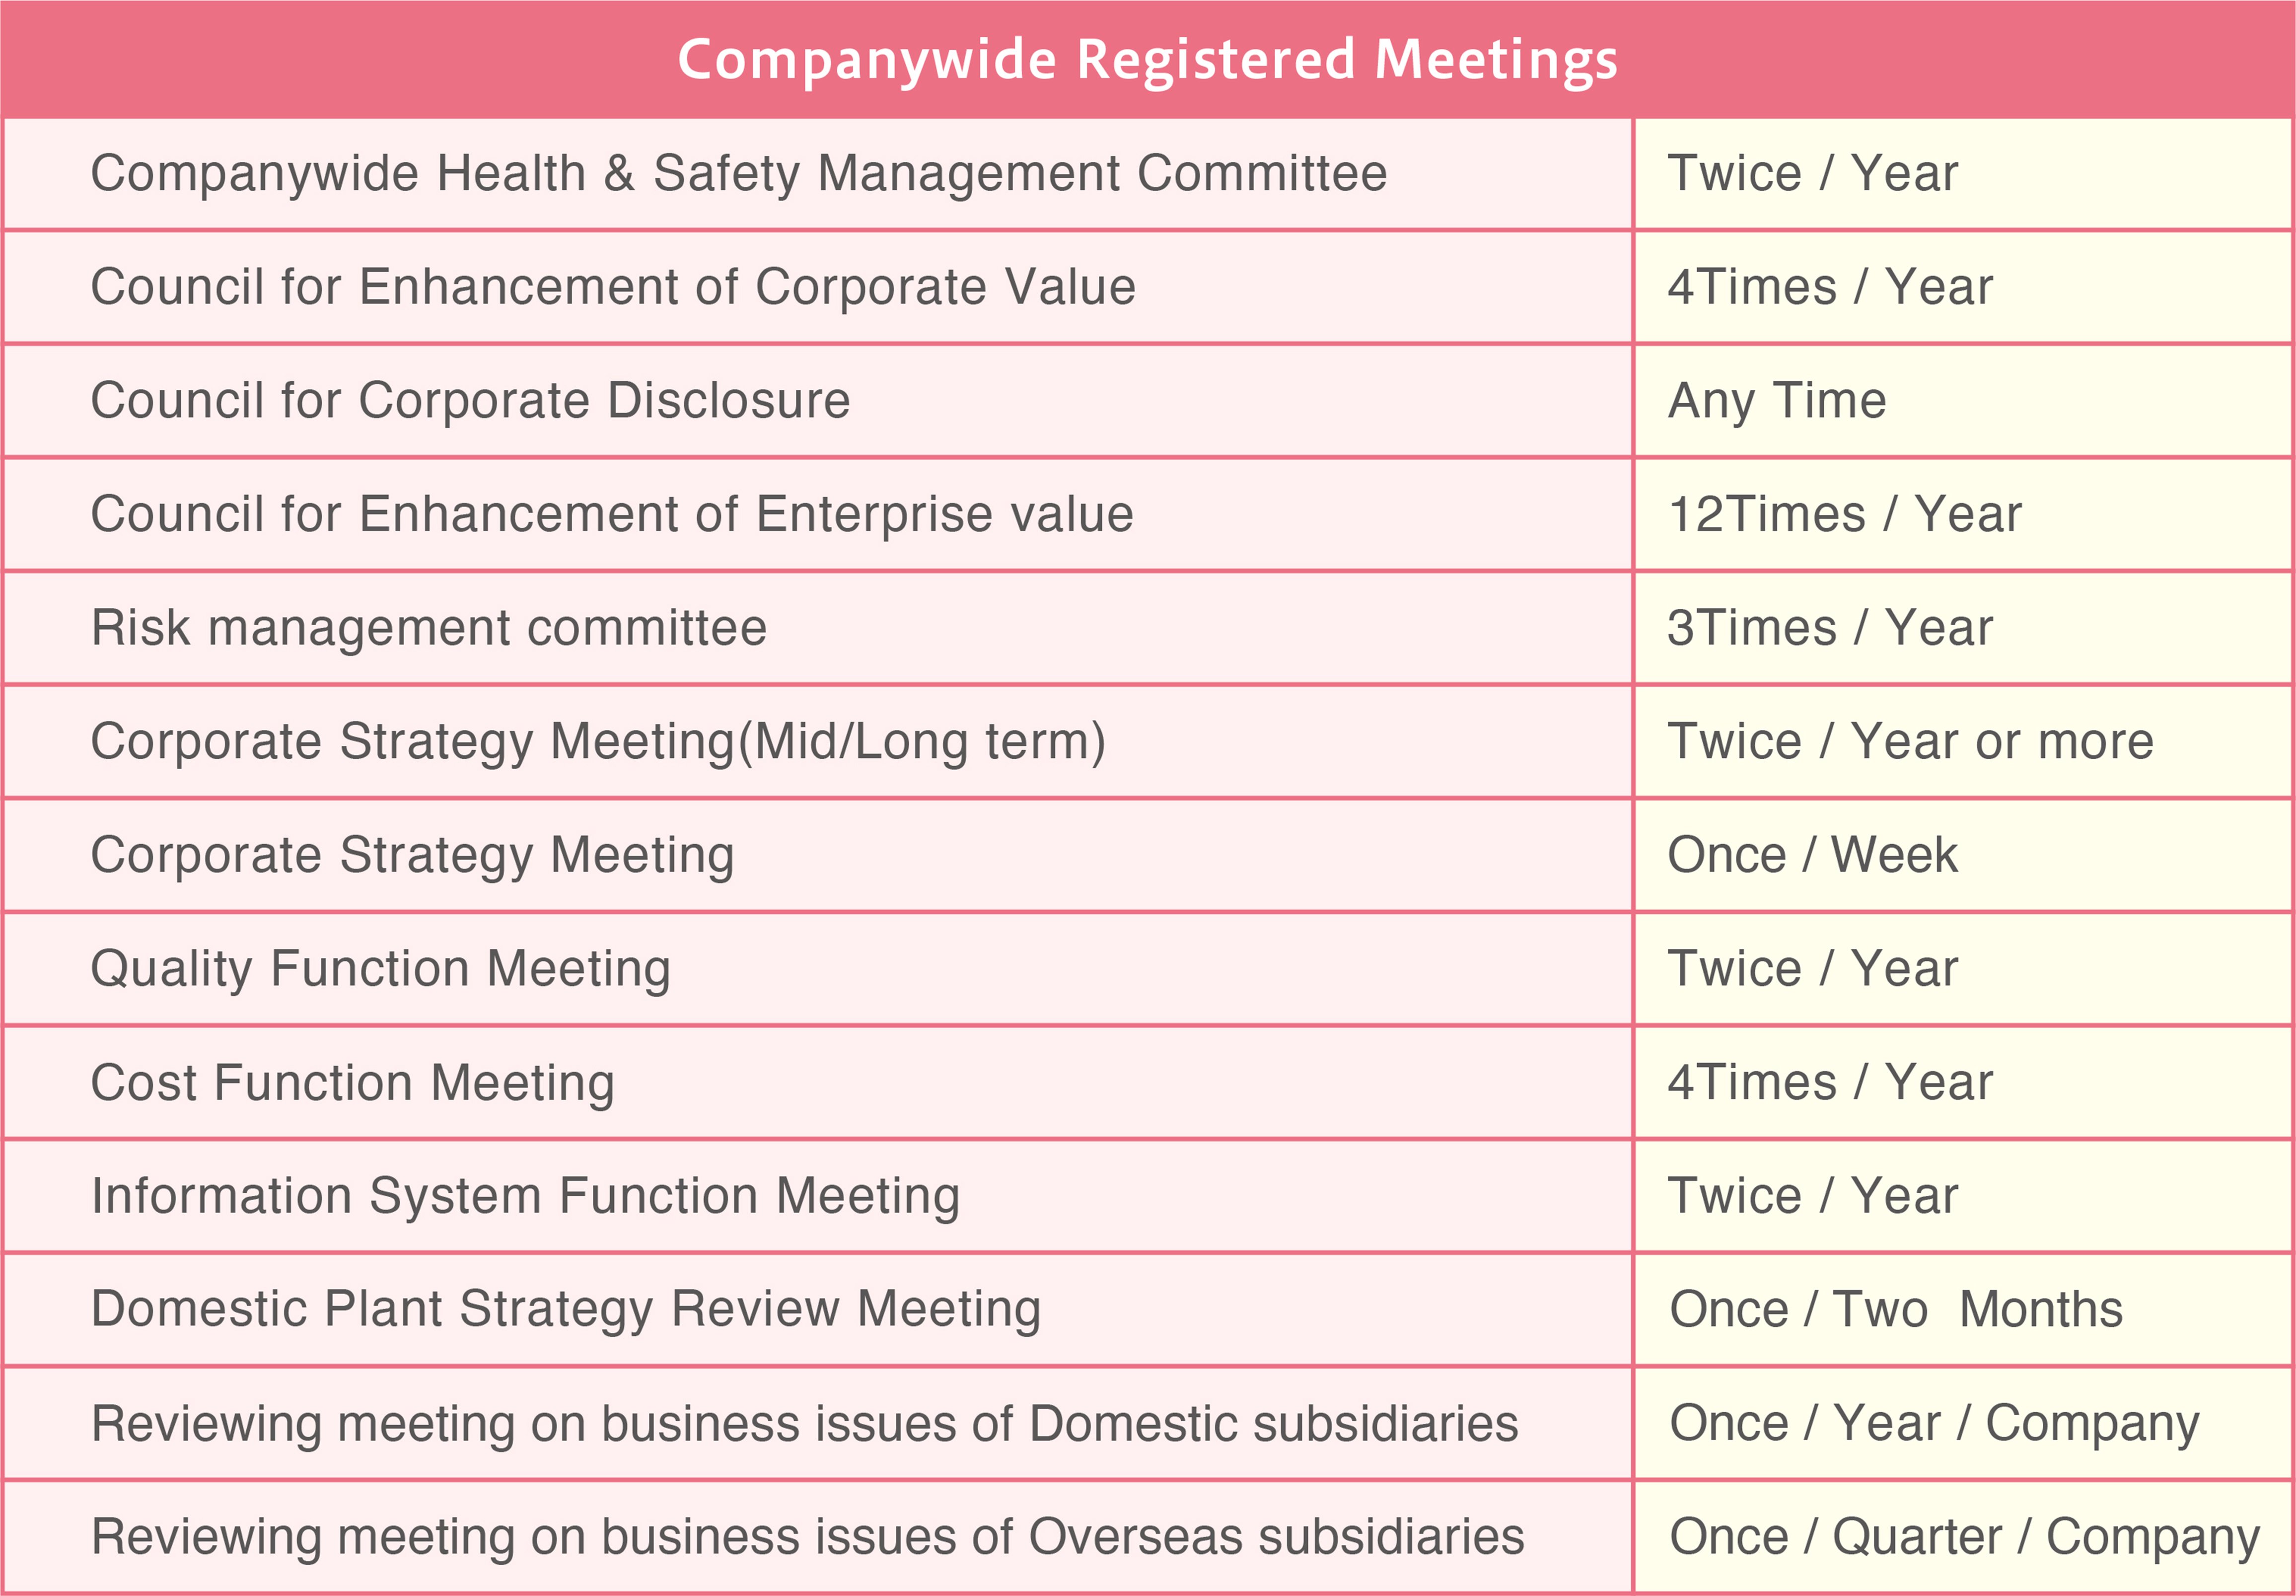 Companywide registered meetings